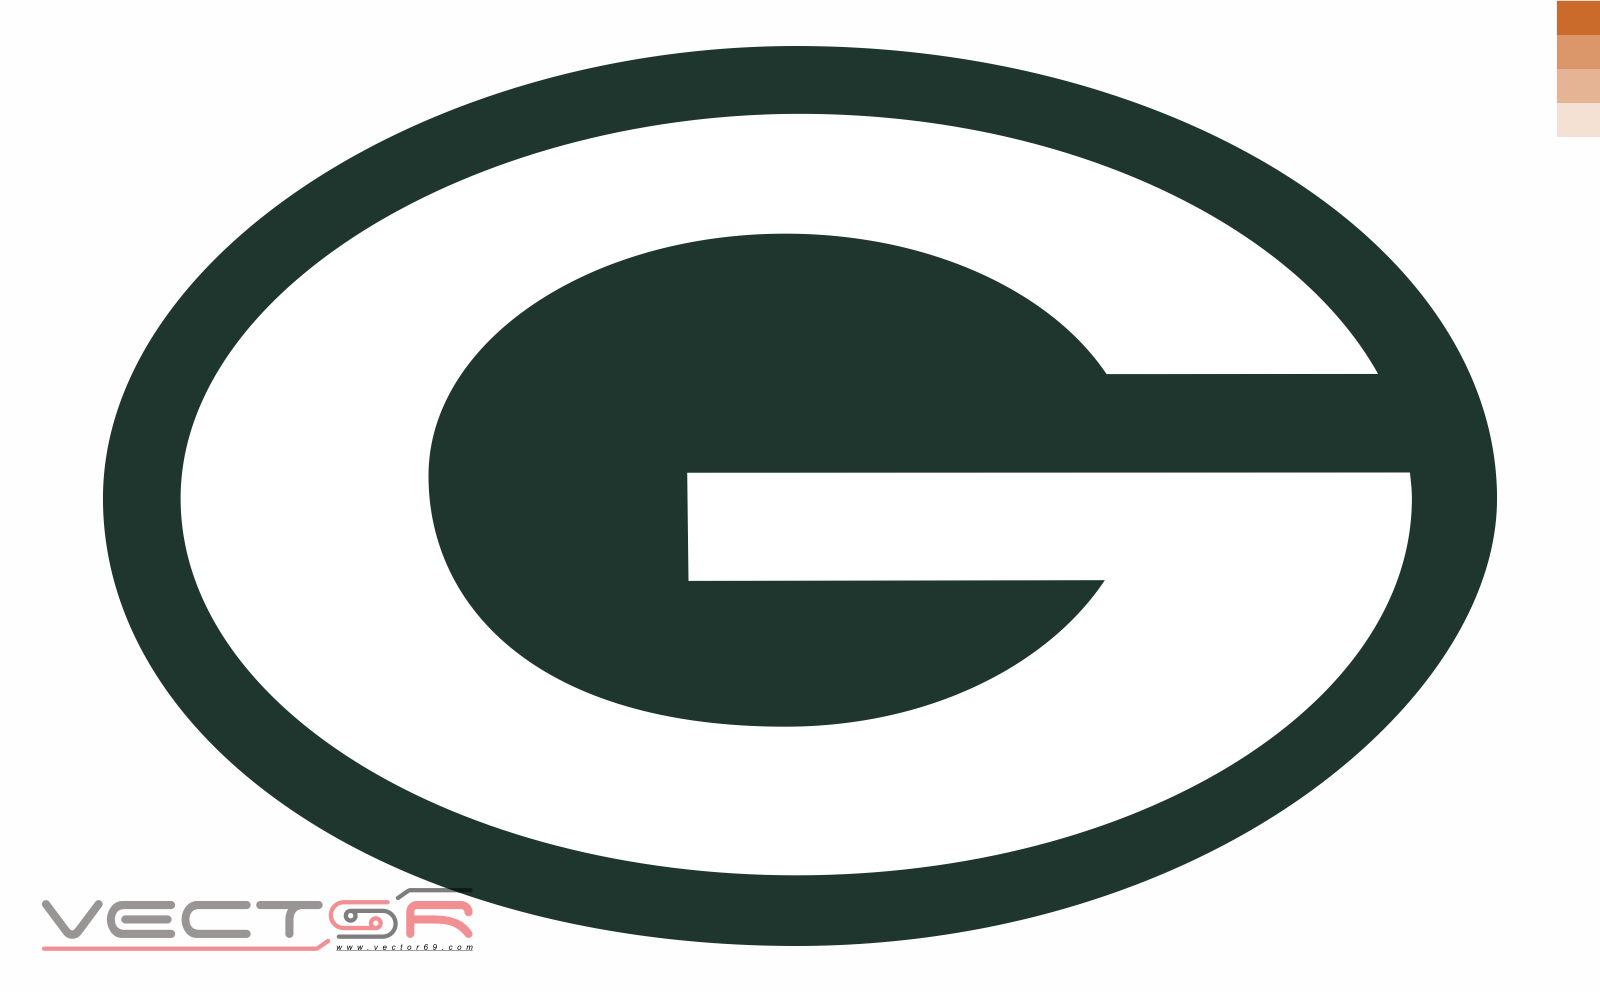 Green Bay Packers 1961-1979 Logo - Download Vector File AI (Adobe Illustrator)